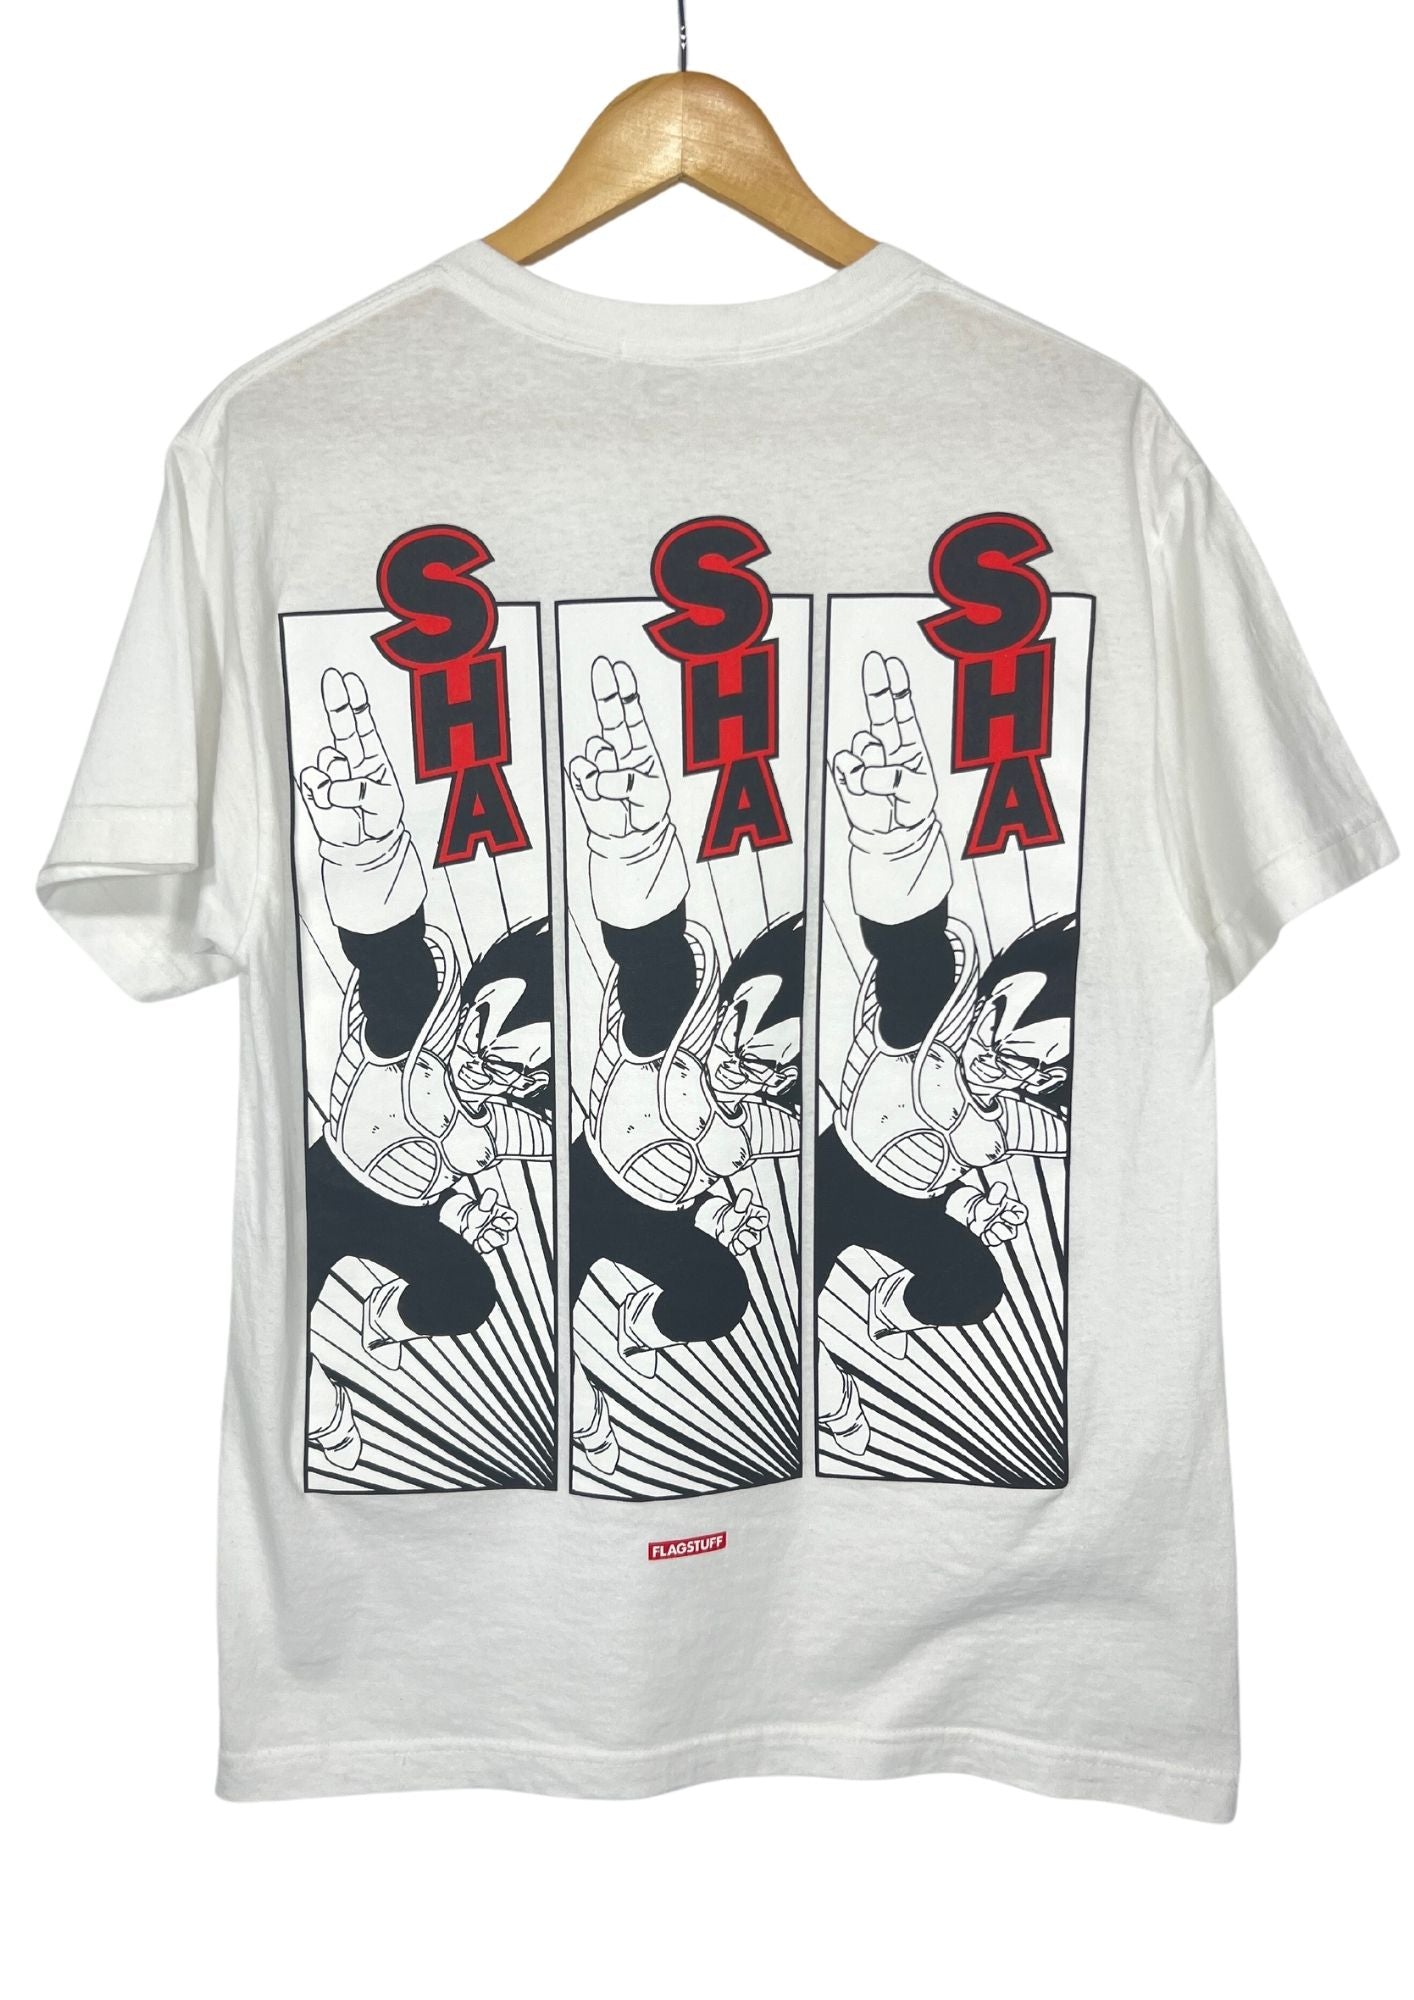 Dragon Ball Z x Flagstuff Vageta T-shirt